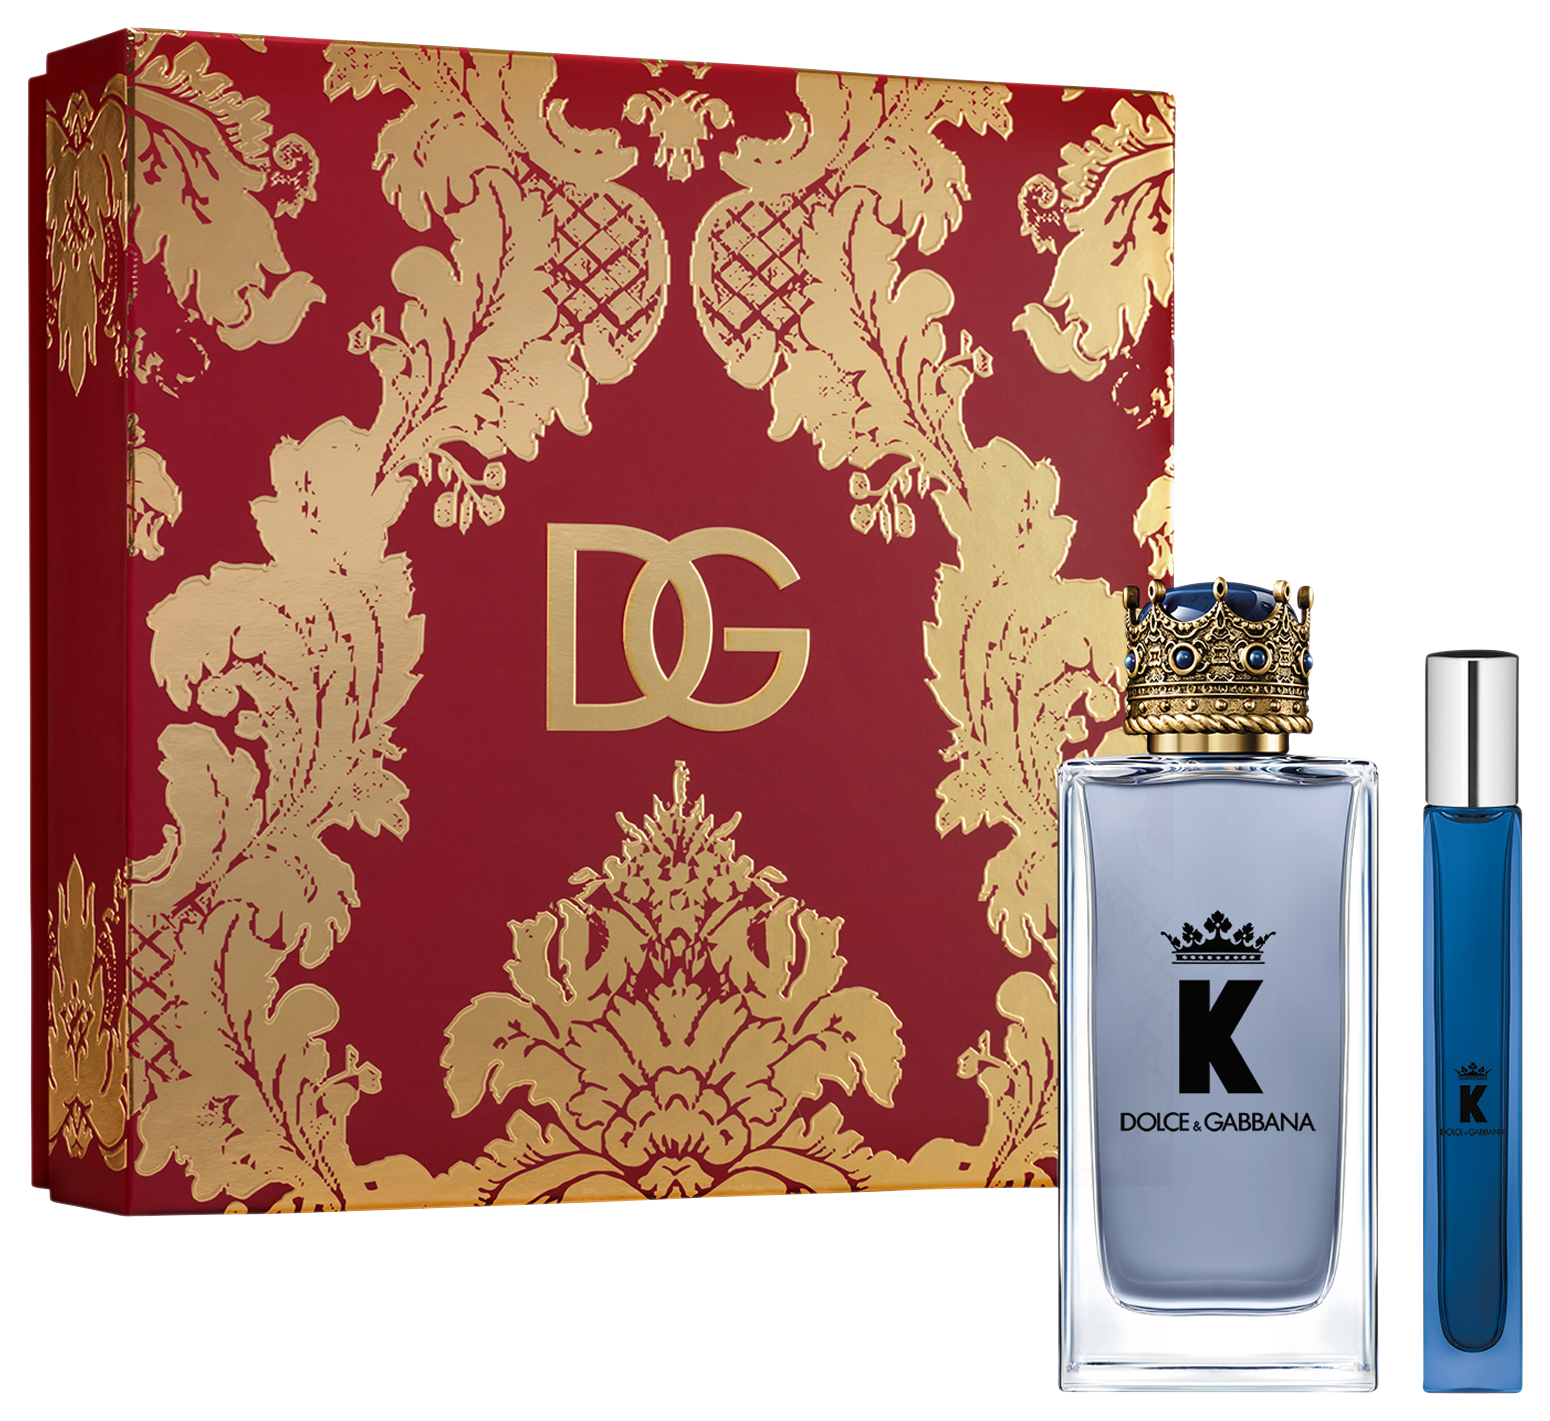 Dolce & Gabbana K Set, EDTS 100 ml + EDTS 10 ml